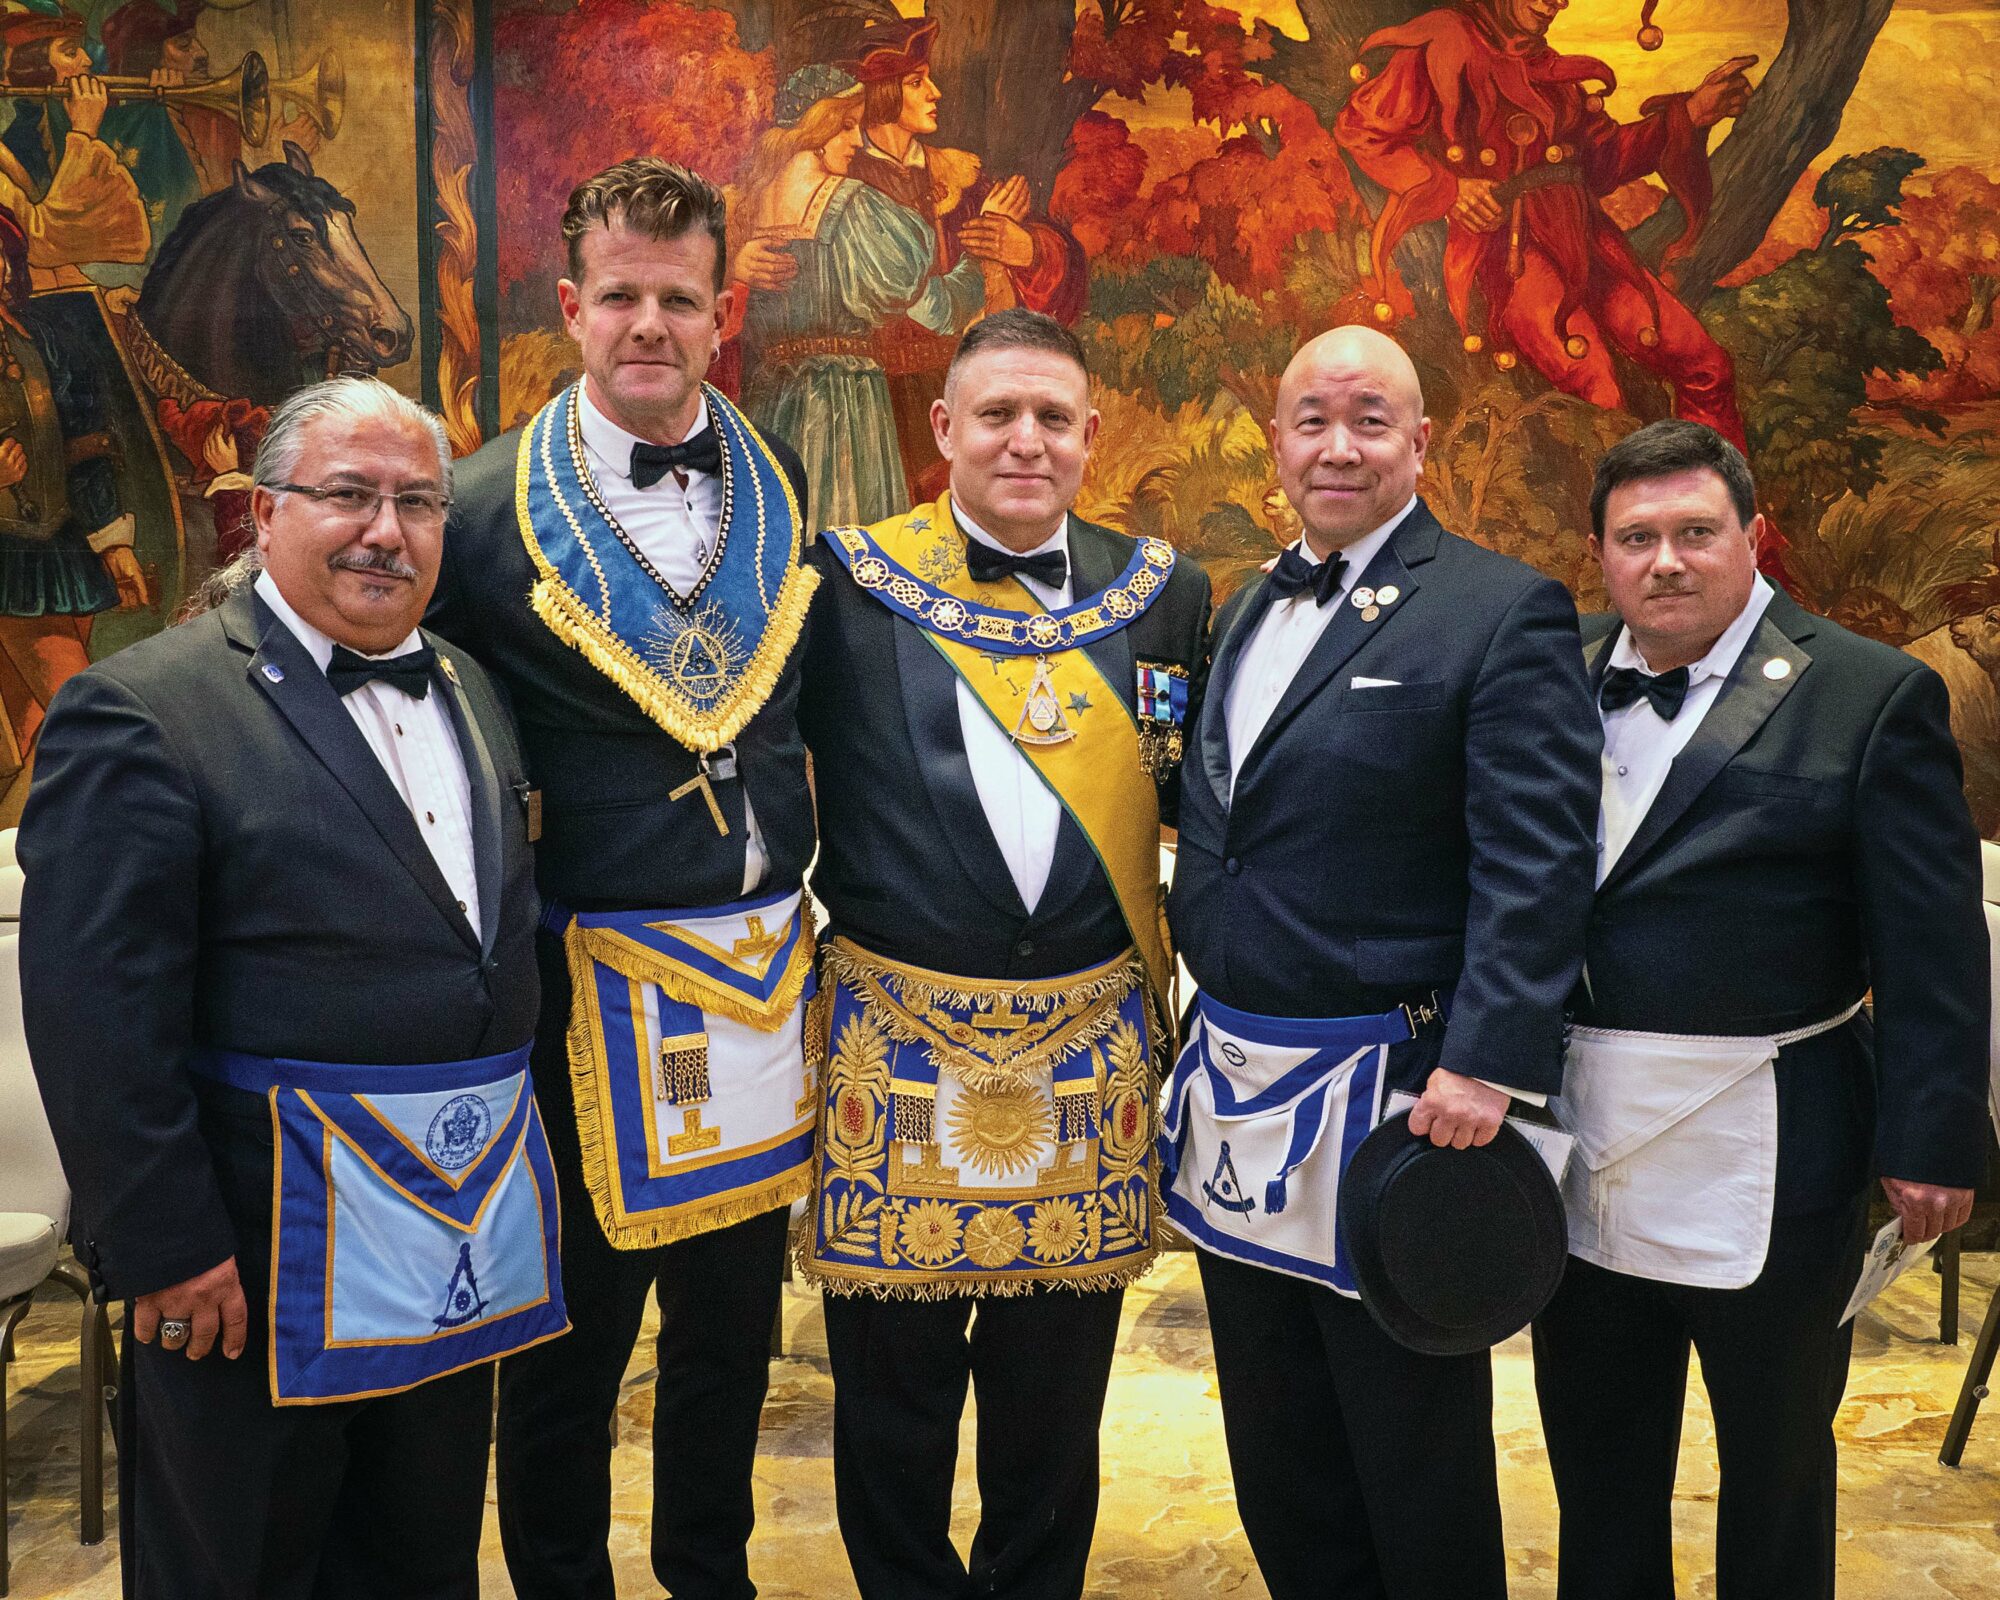 California Freemasons with the Grand Master of the Symbolic Grand Lodge of Hungary